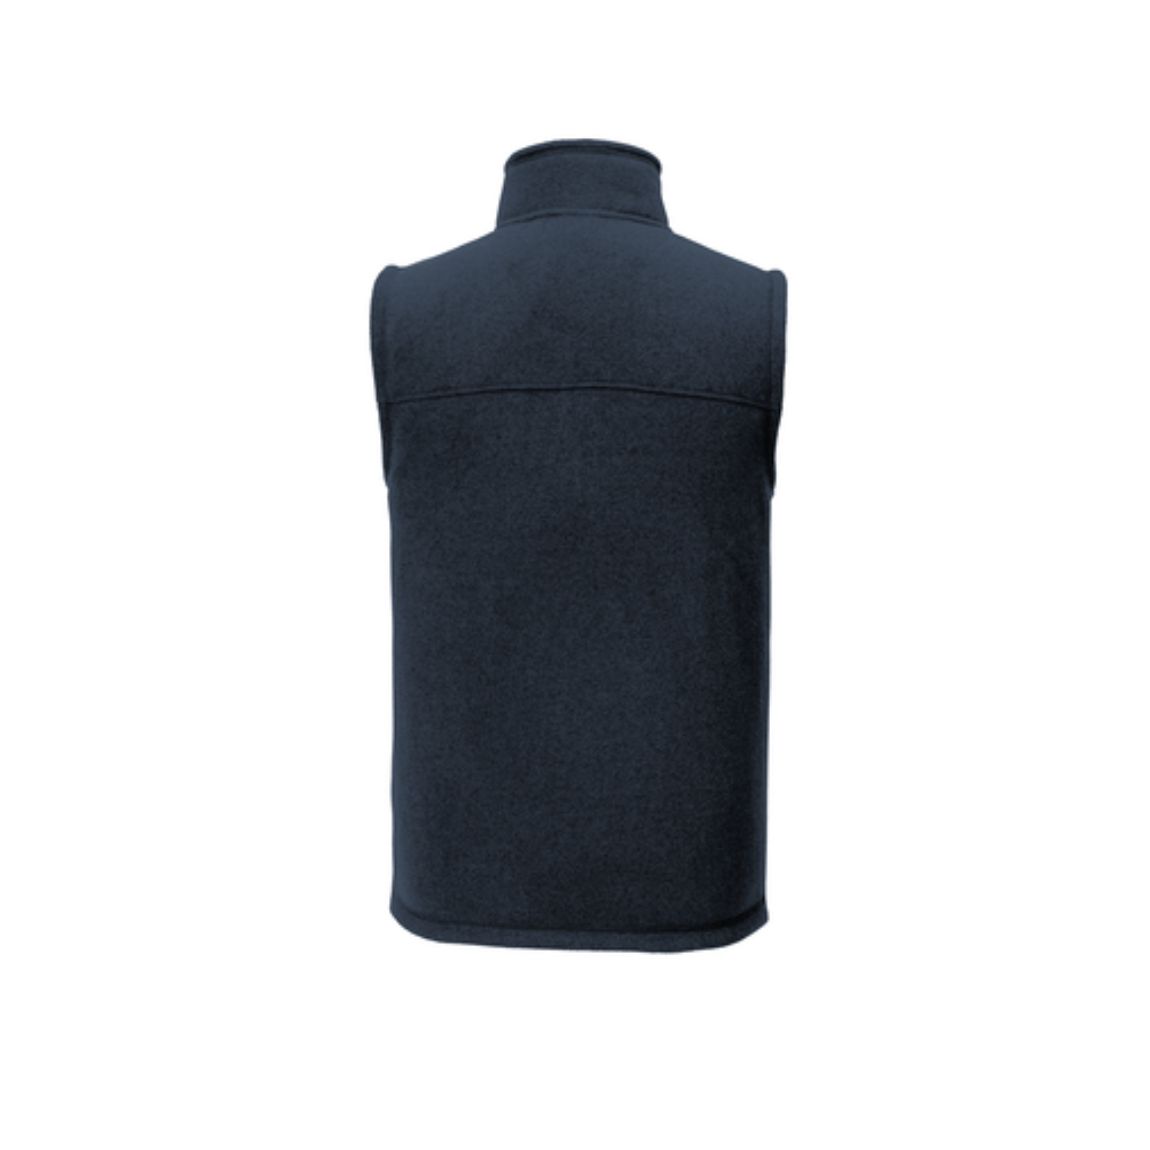 The North Face ® Sweater Fleece Vest